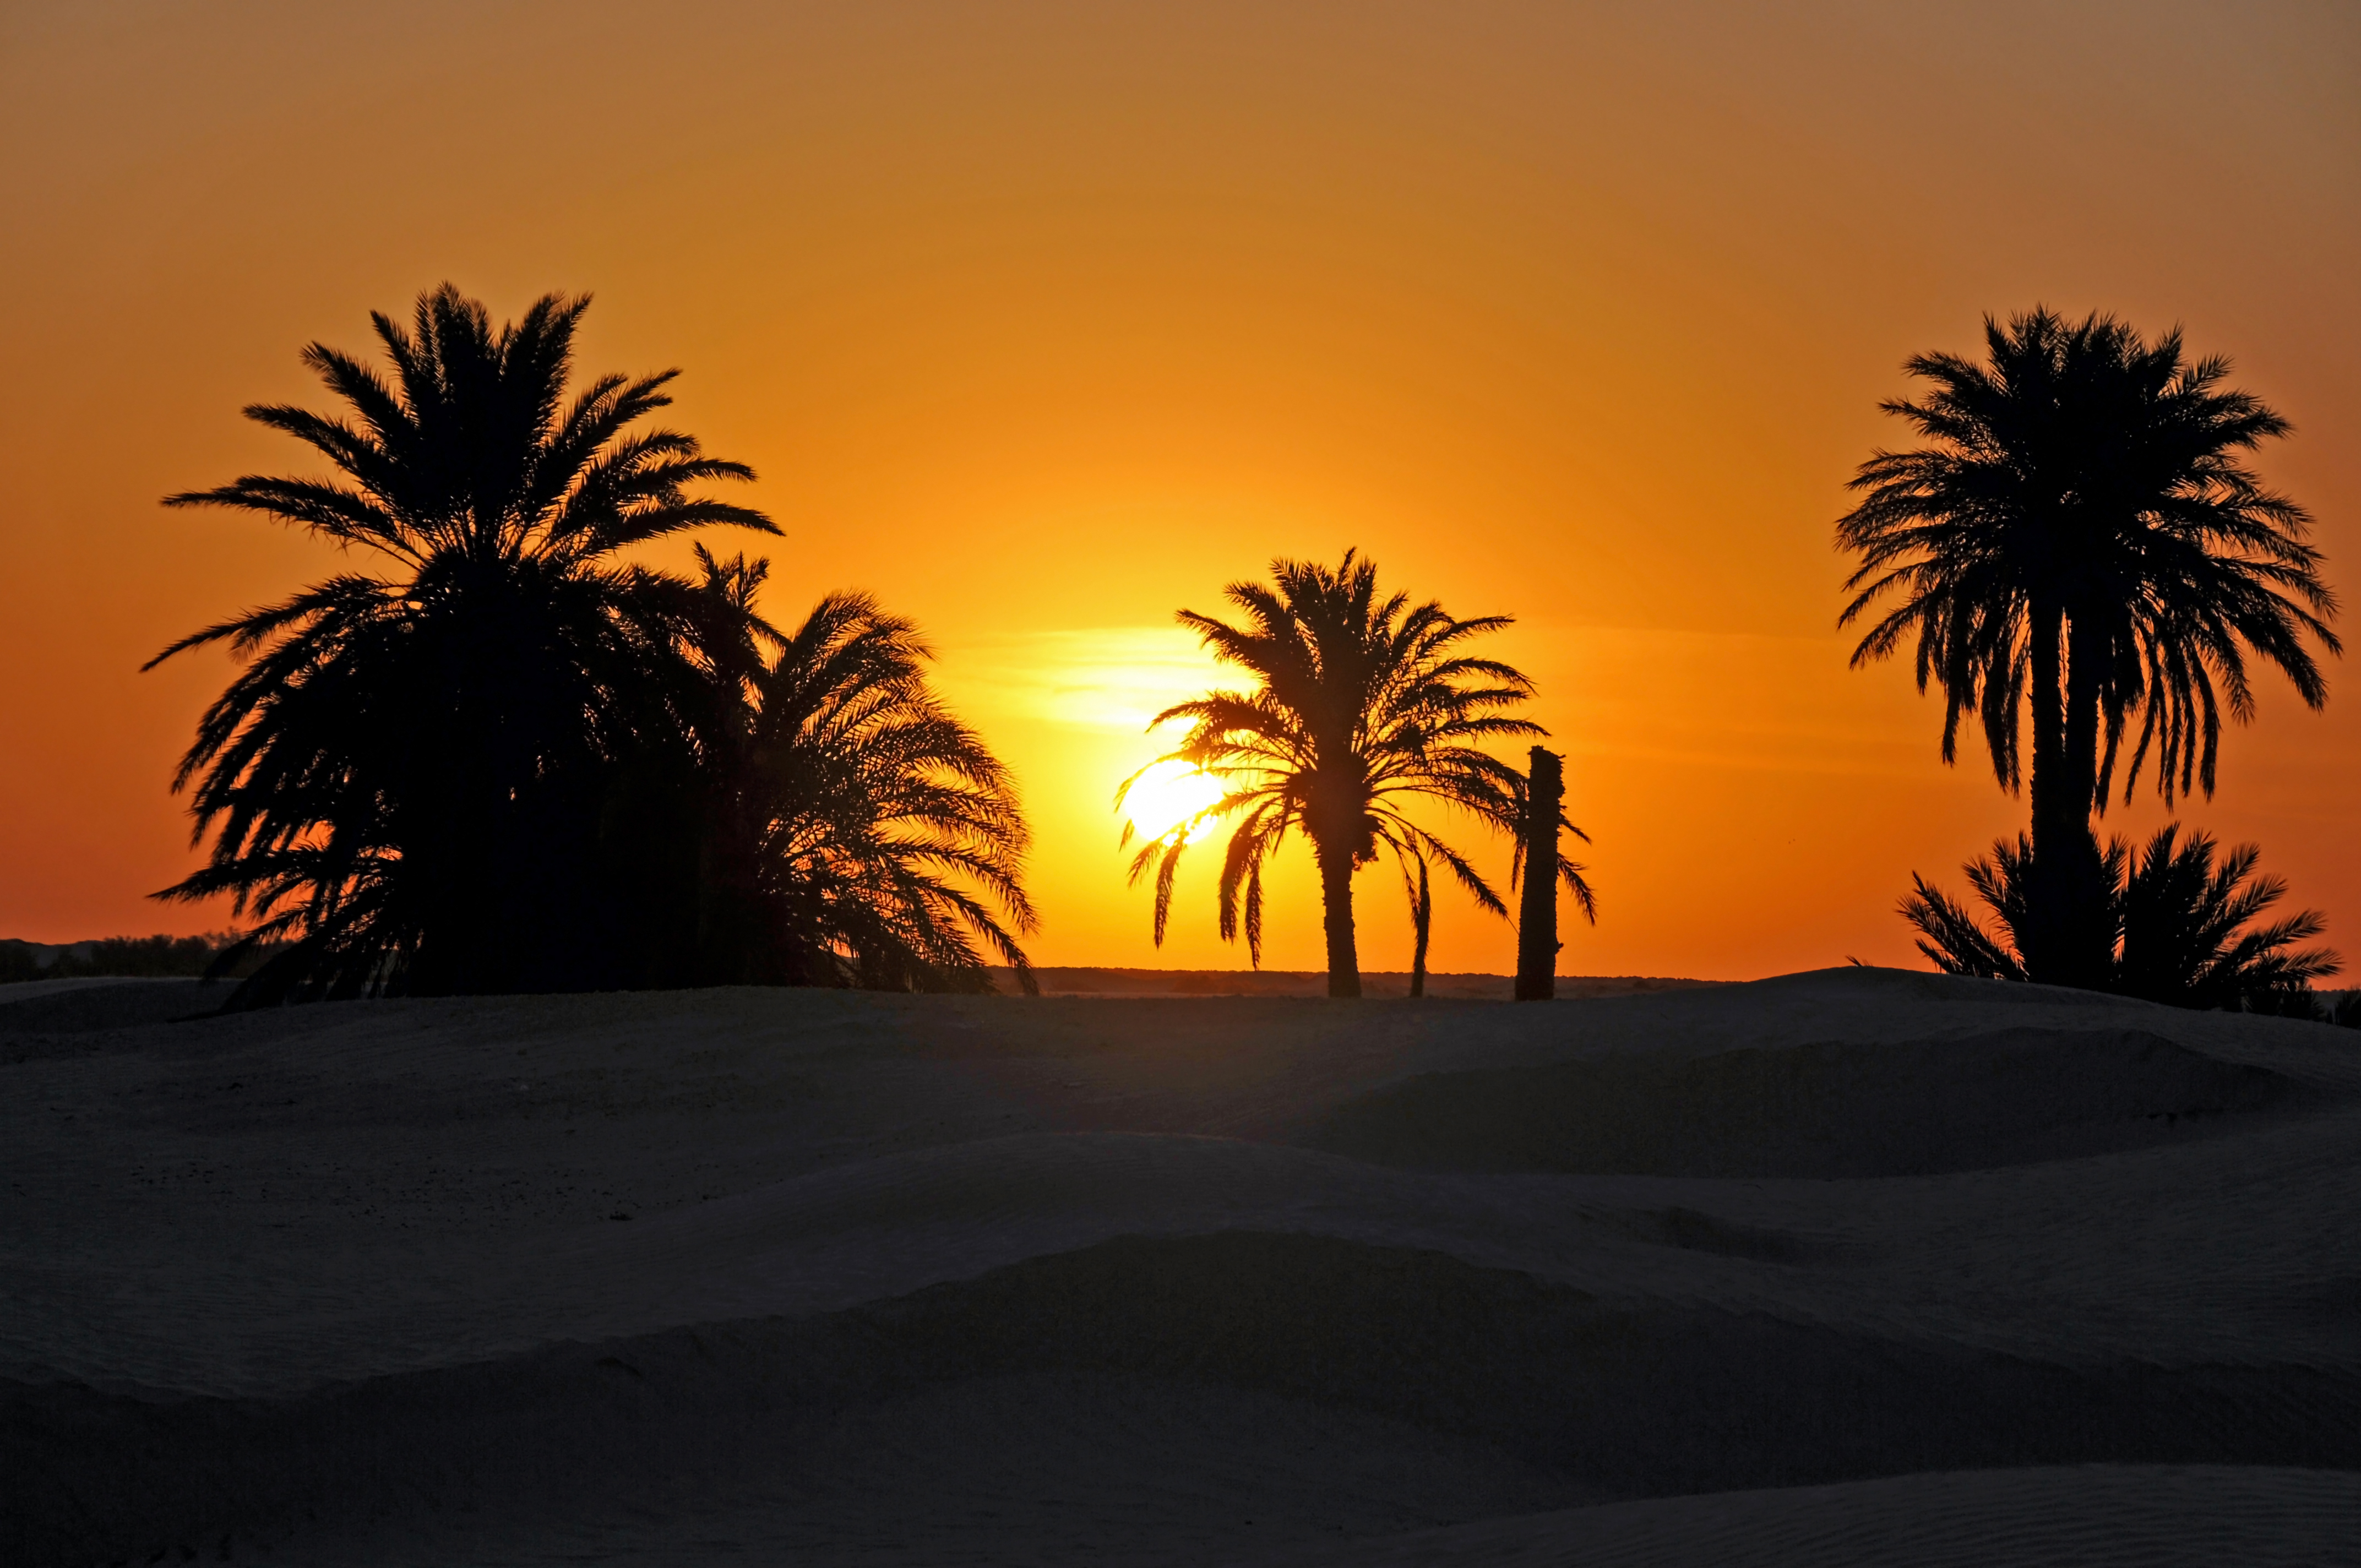 Климат туниса. Тунис Оазис шебека. Пустыни Туниса. Тунис климат. Пустыня сахара в Тунисе.